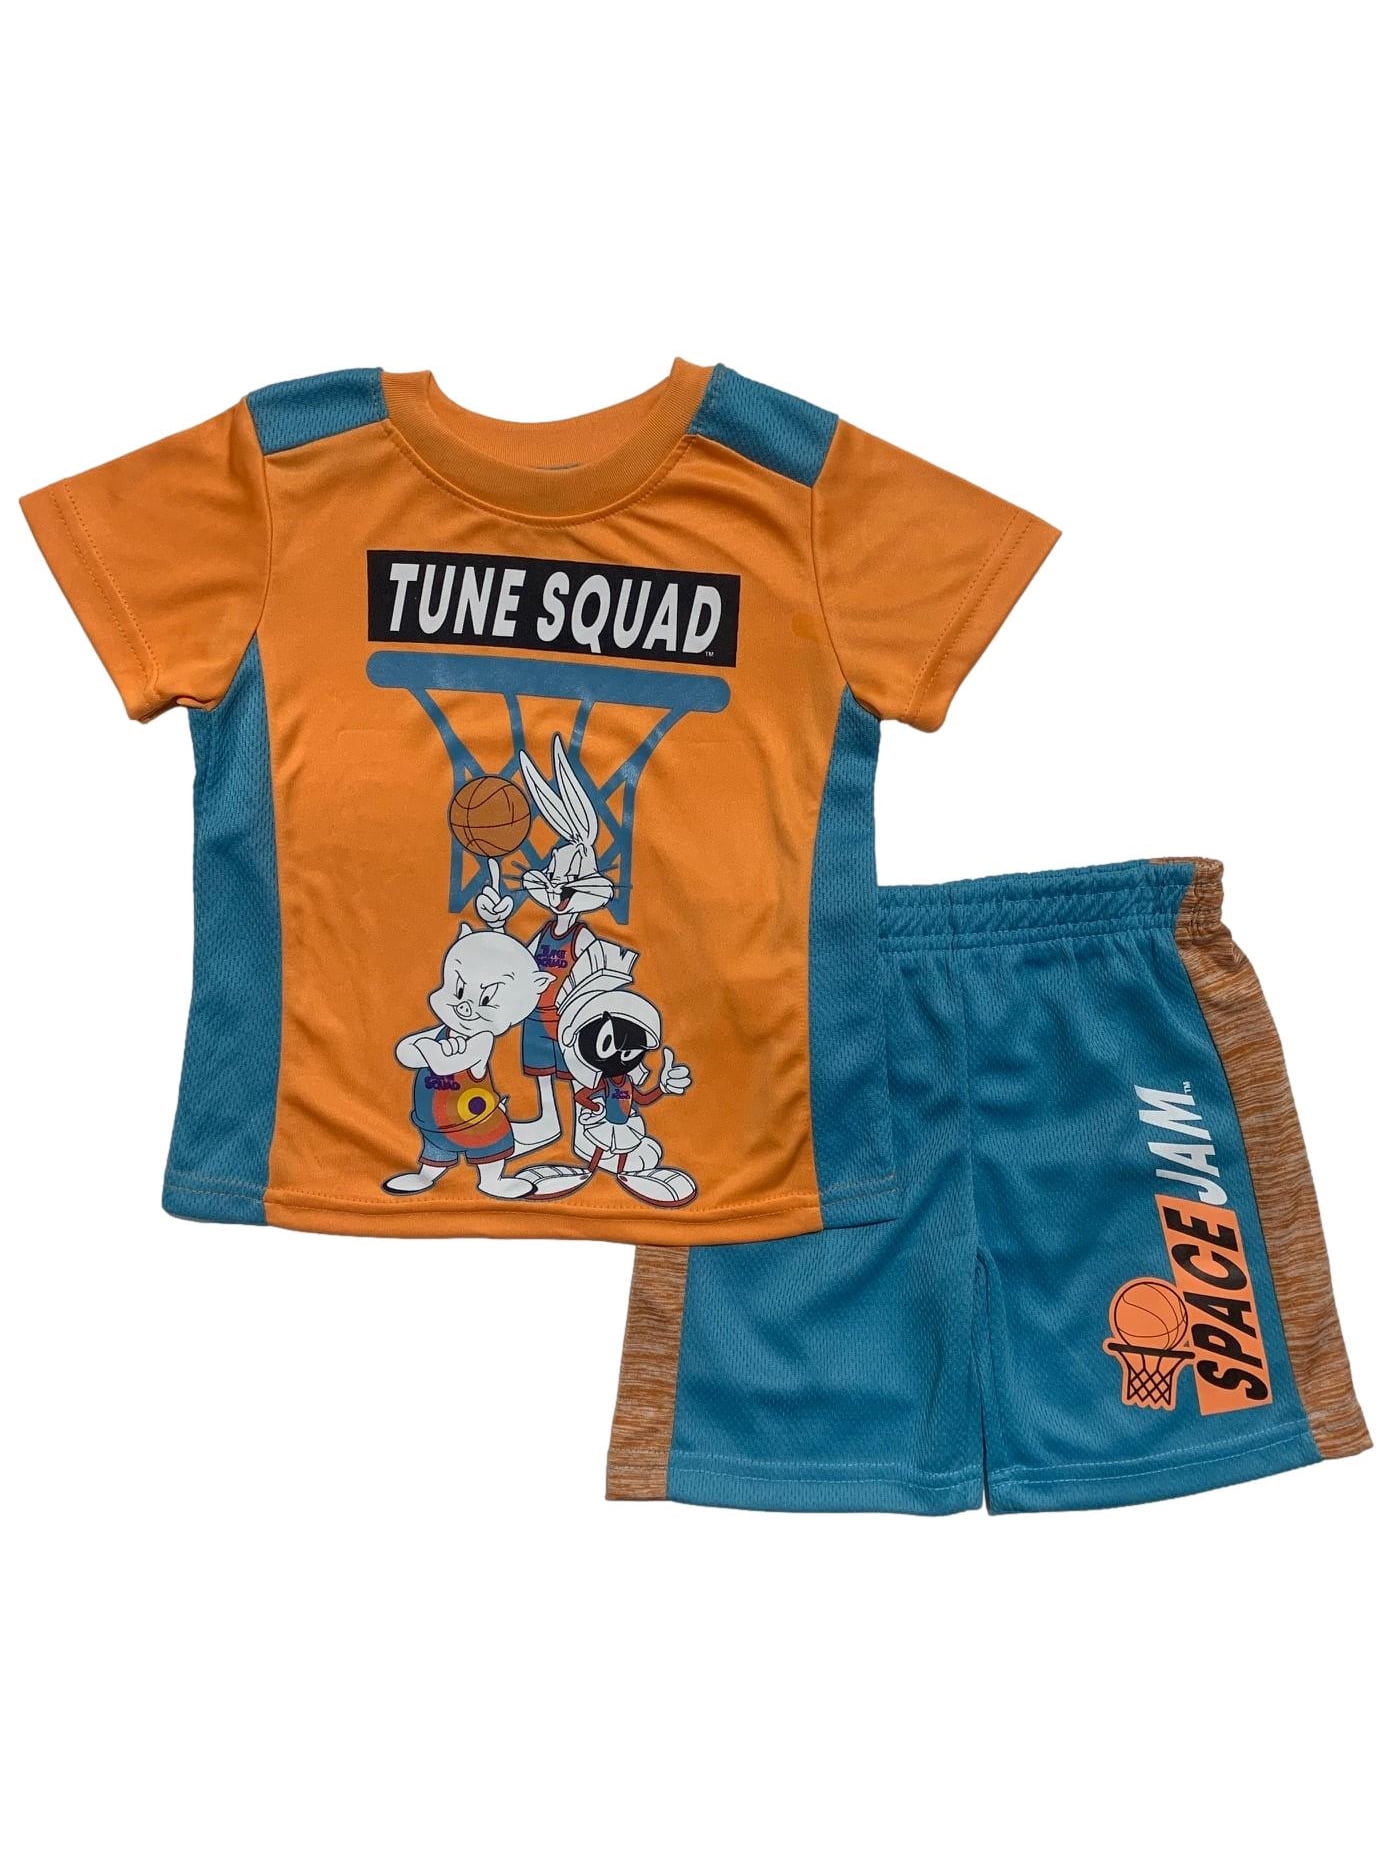 tune squad shorts